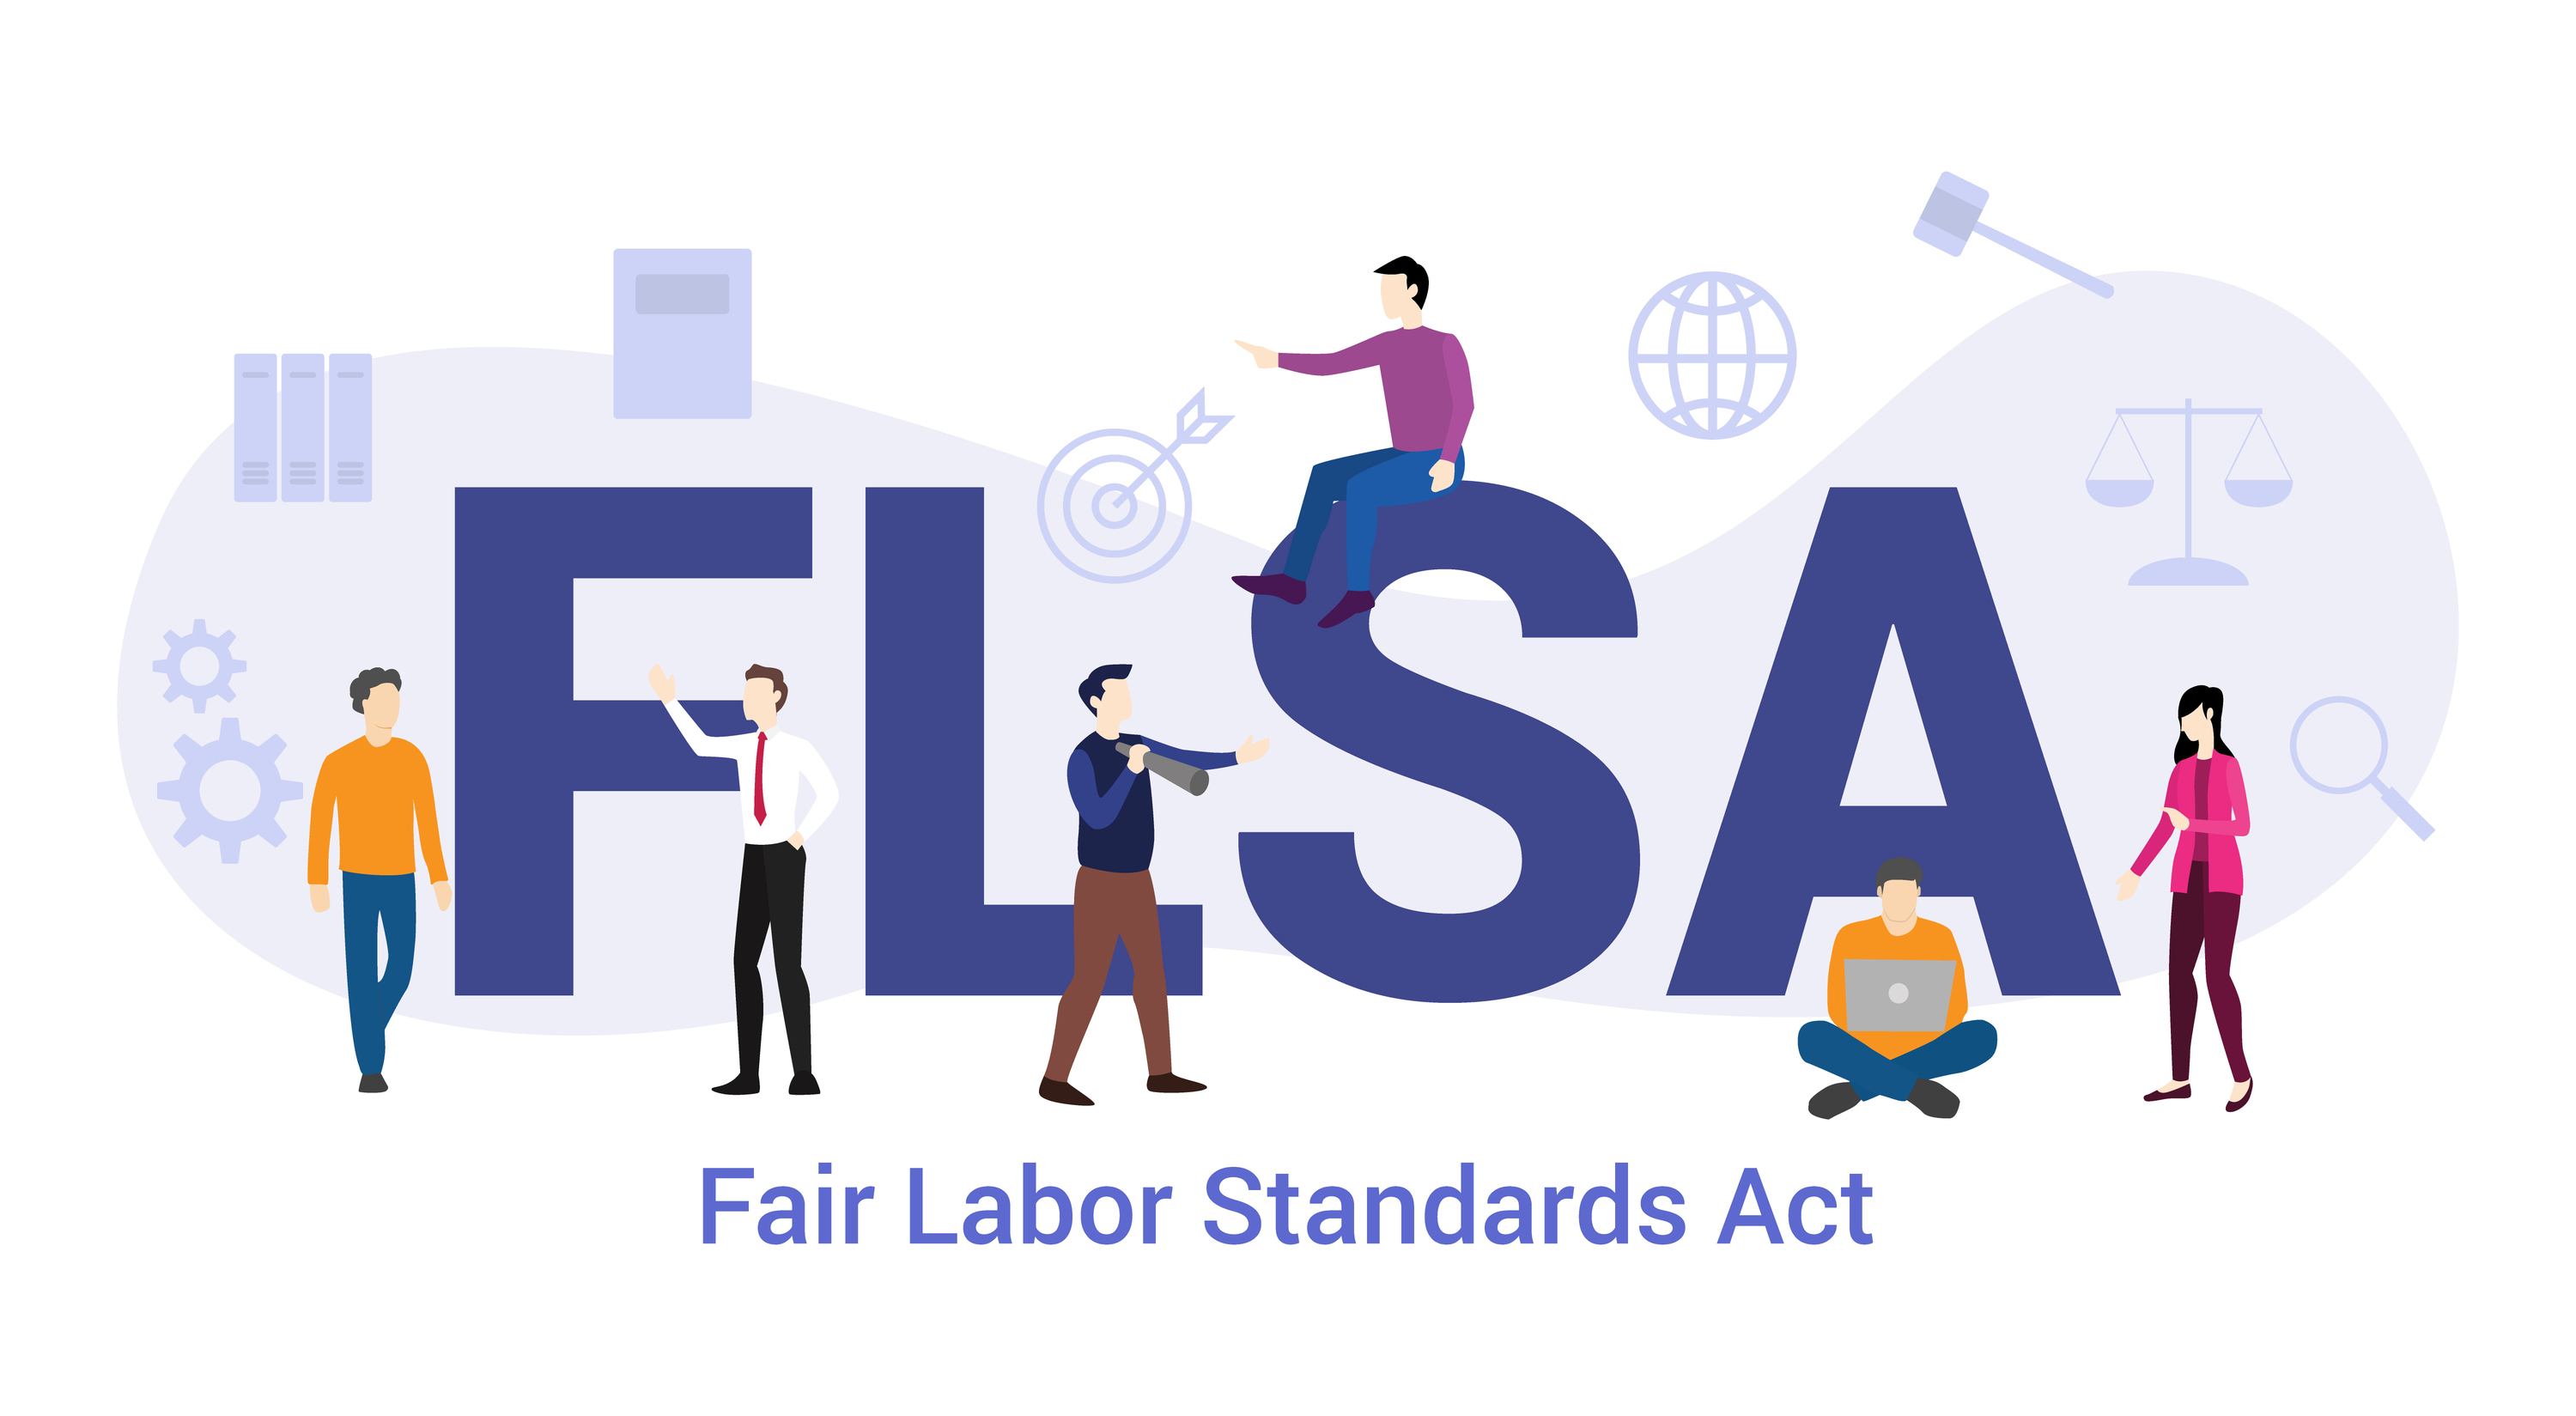 Flsa Fair Labor Standards Act Concept With Big Word Or Text And Kramer Elkins amp Watt LLC